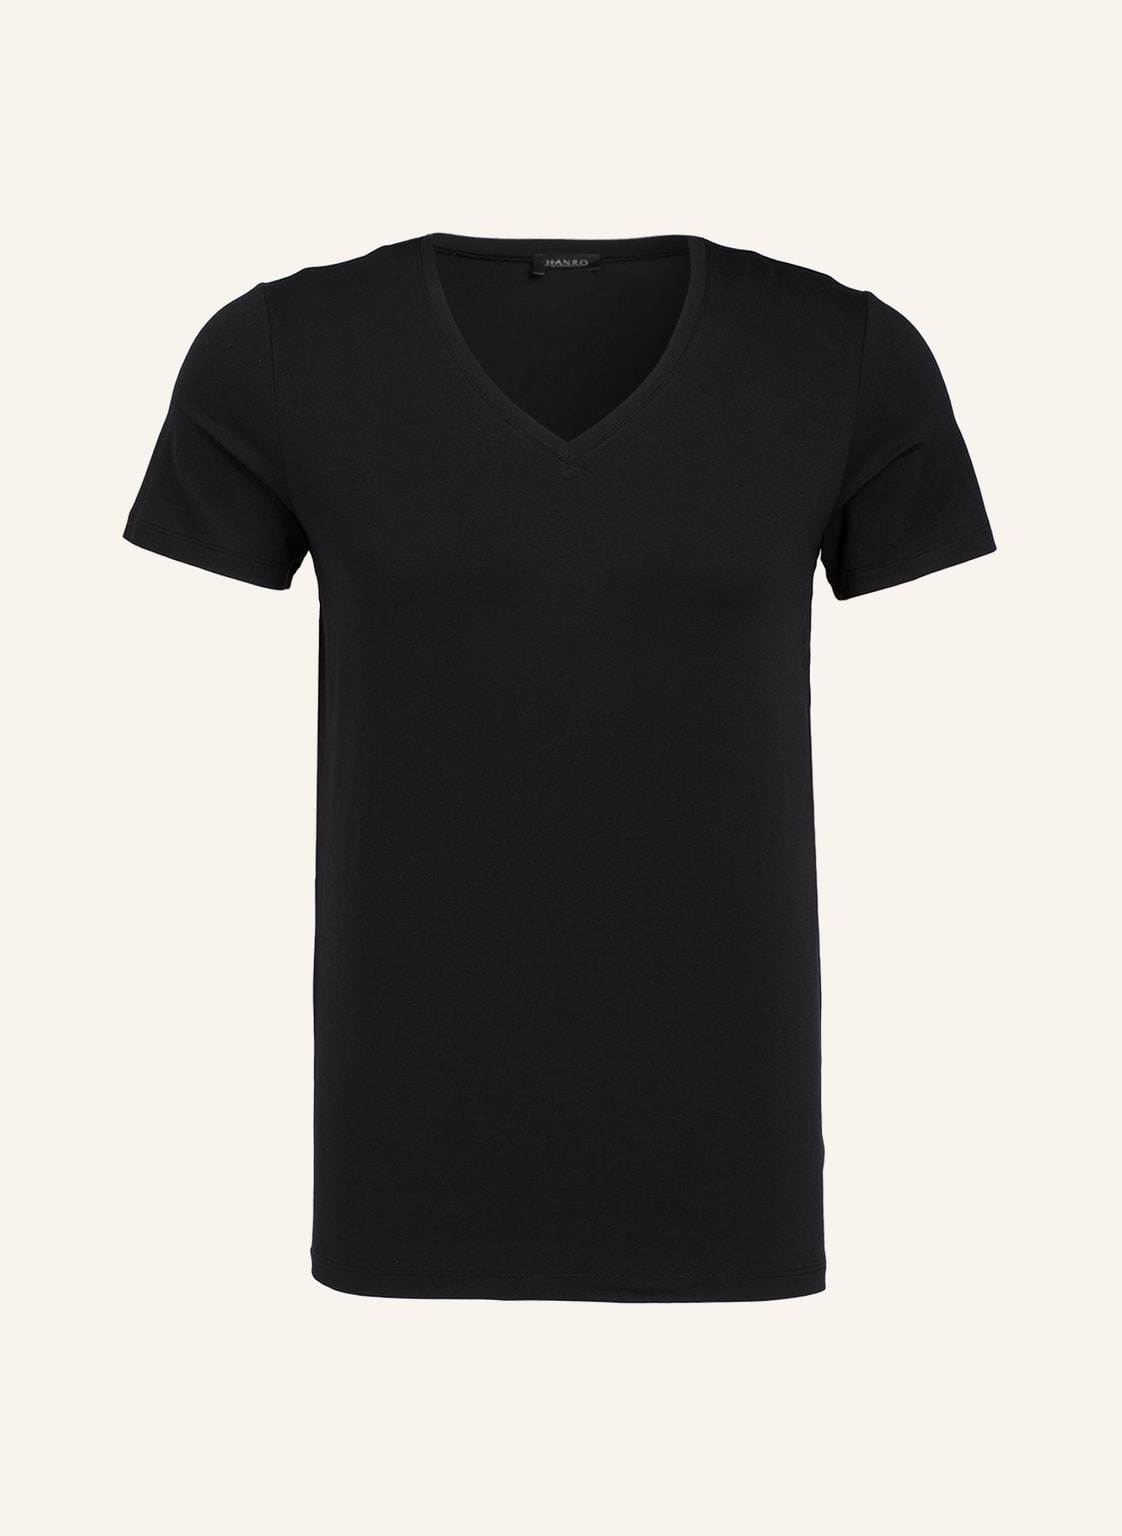 Hanro V-Shirt Cotton Superior schwarz von Hanro